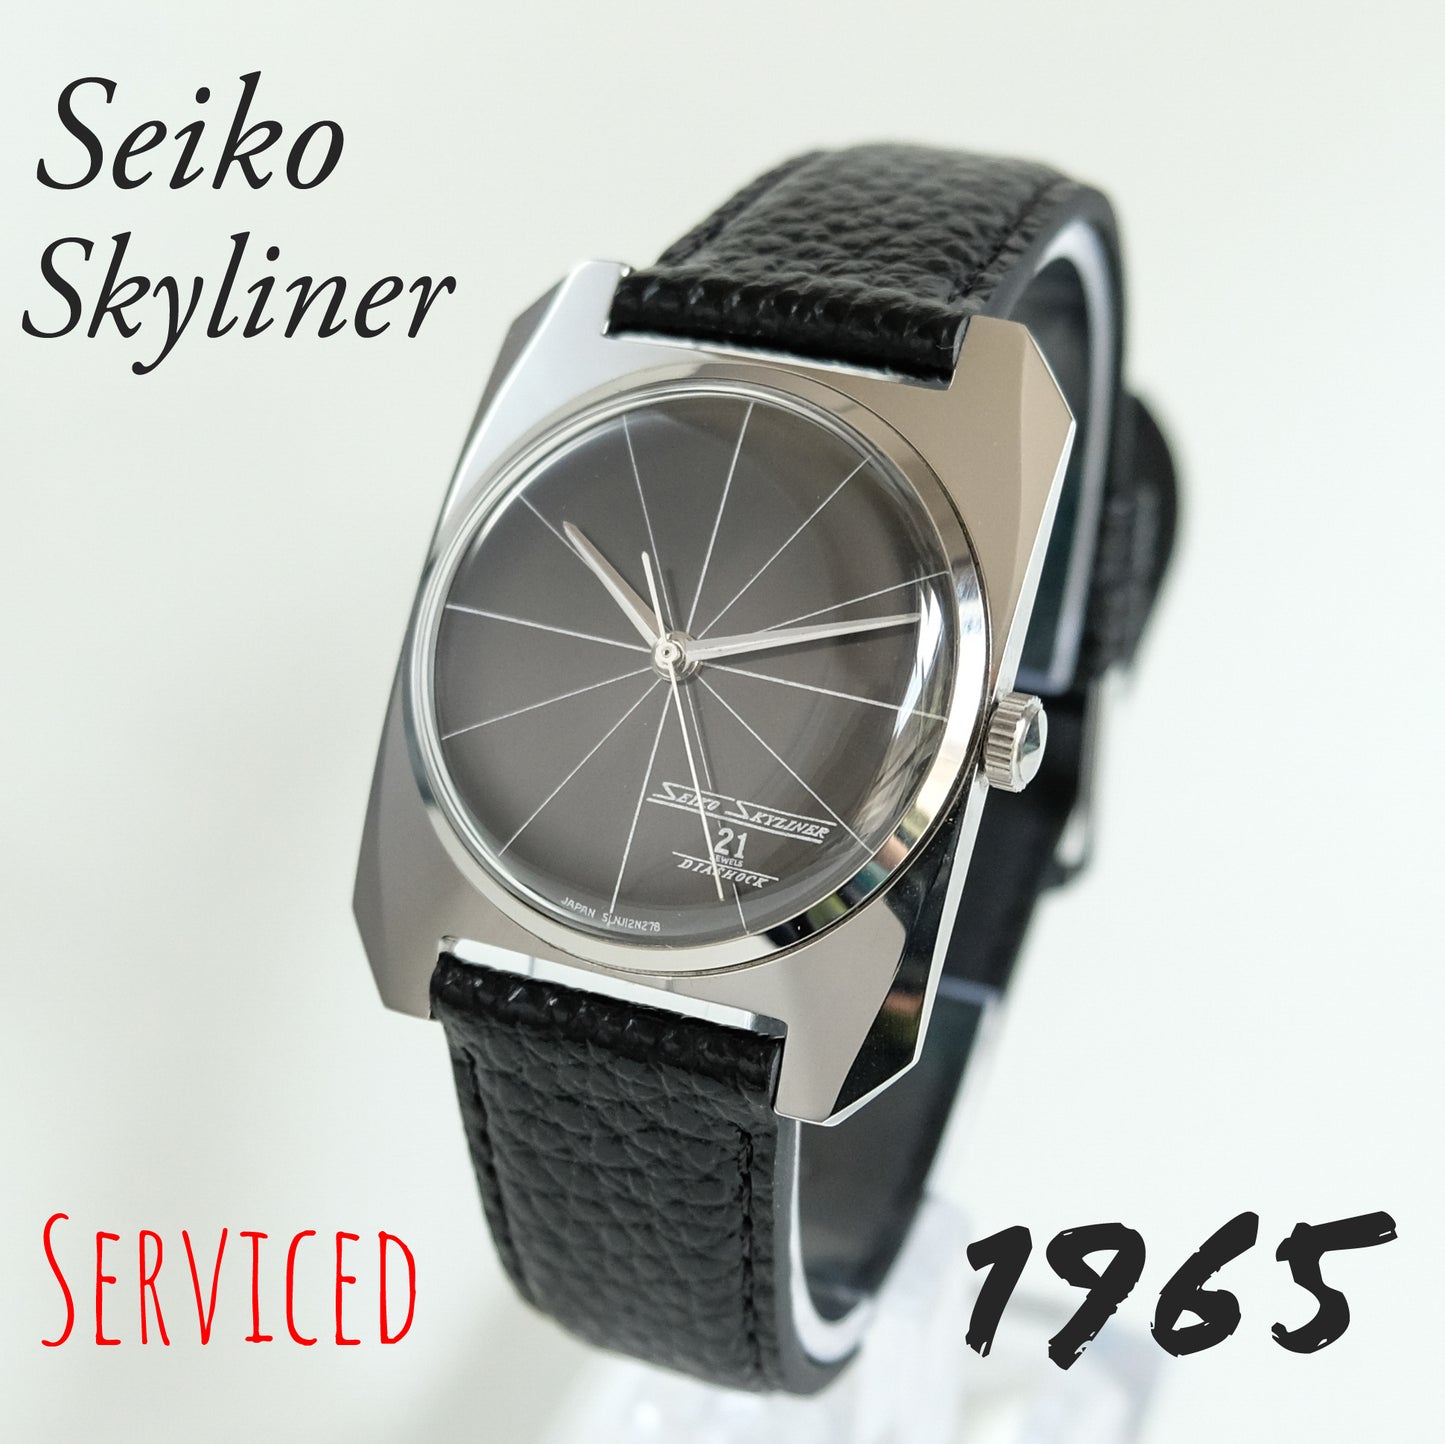 1965 Seiko Skyliner, 6220-7990